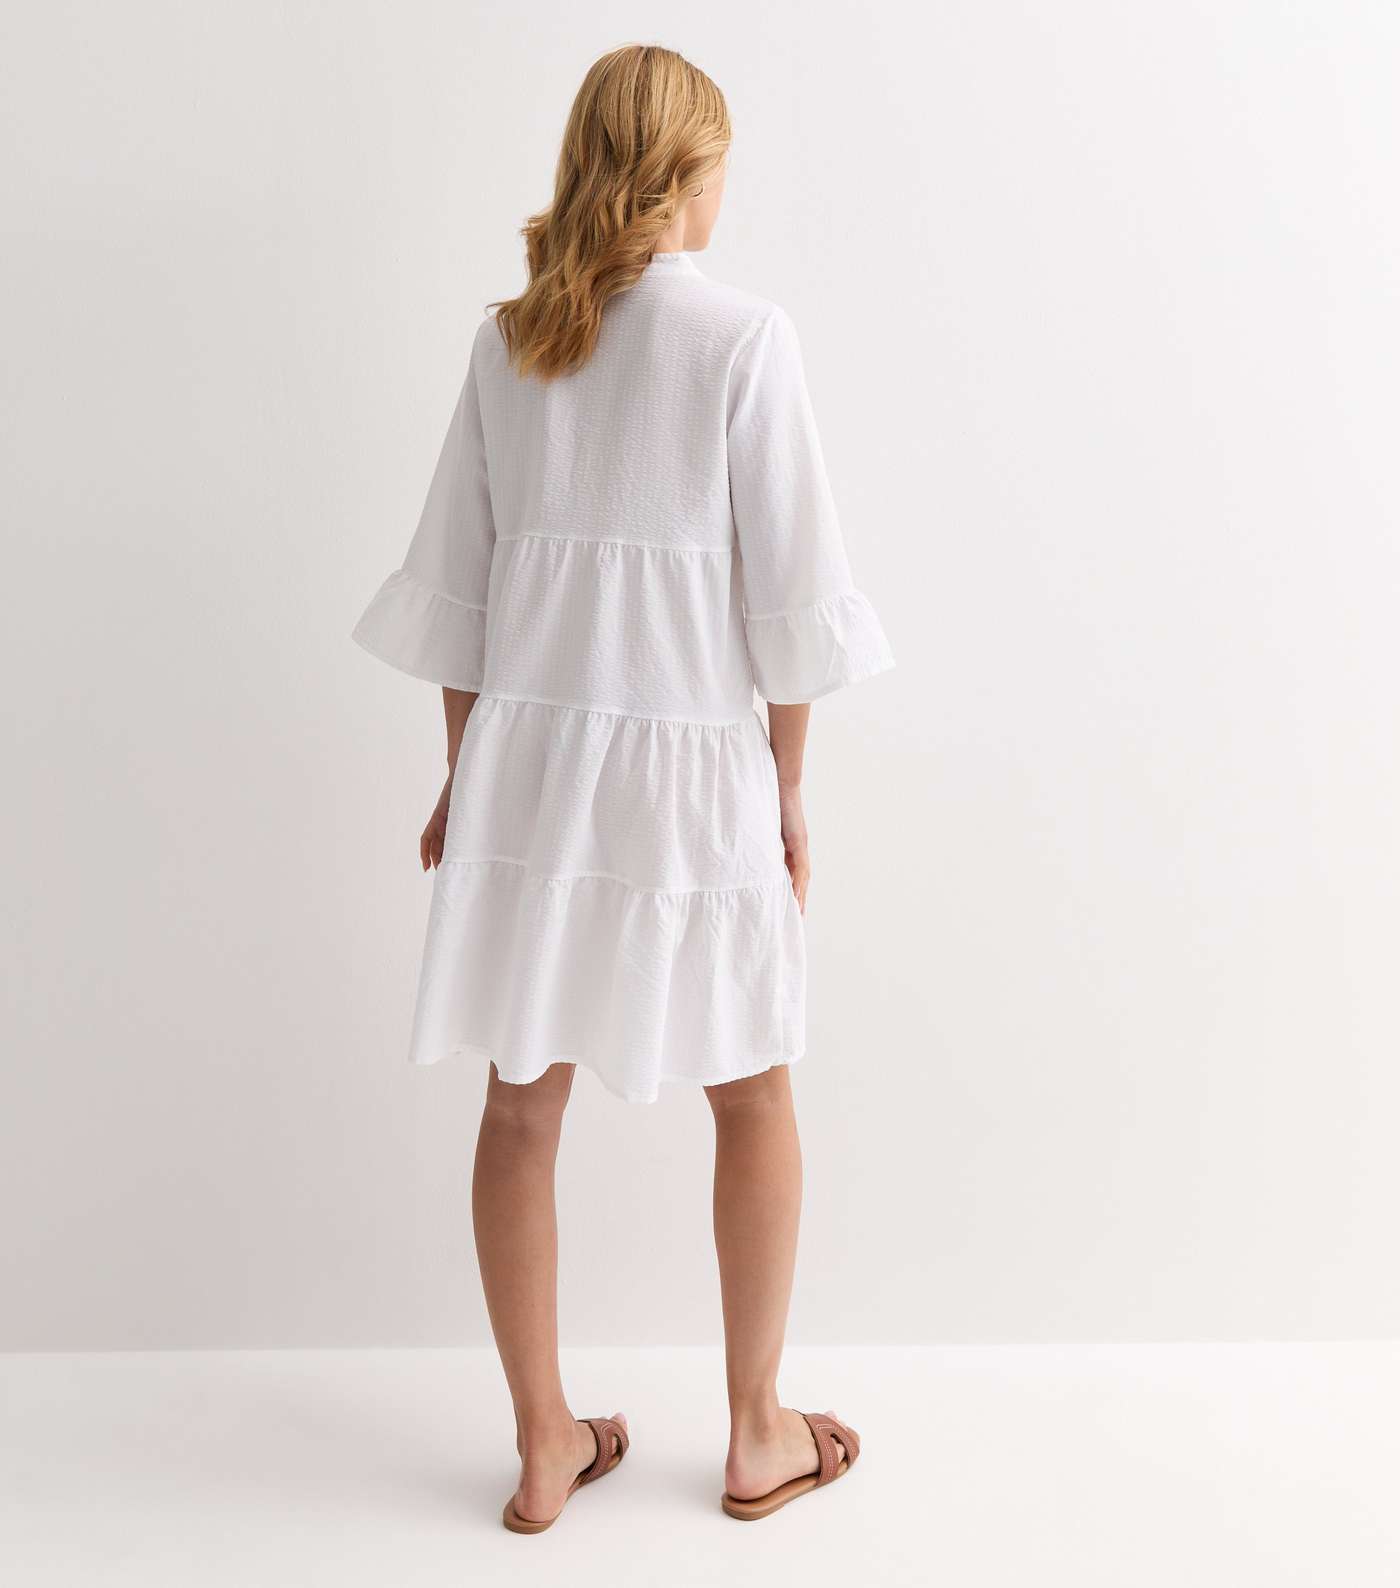 Gini London White Textured Tiered Mini Dress Image 4